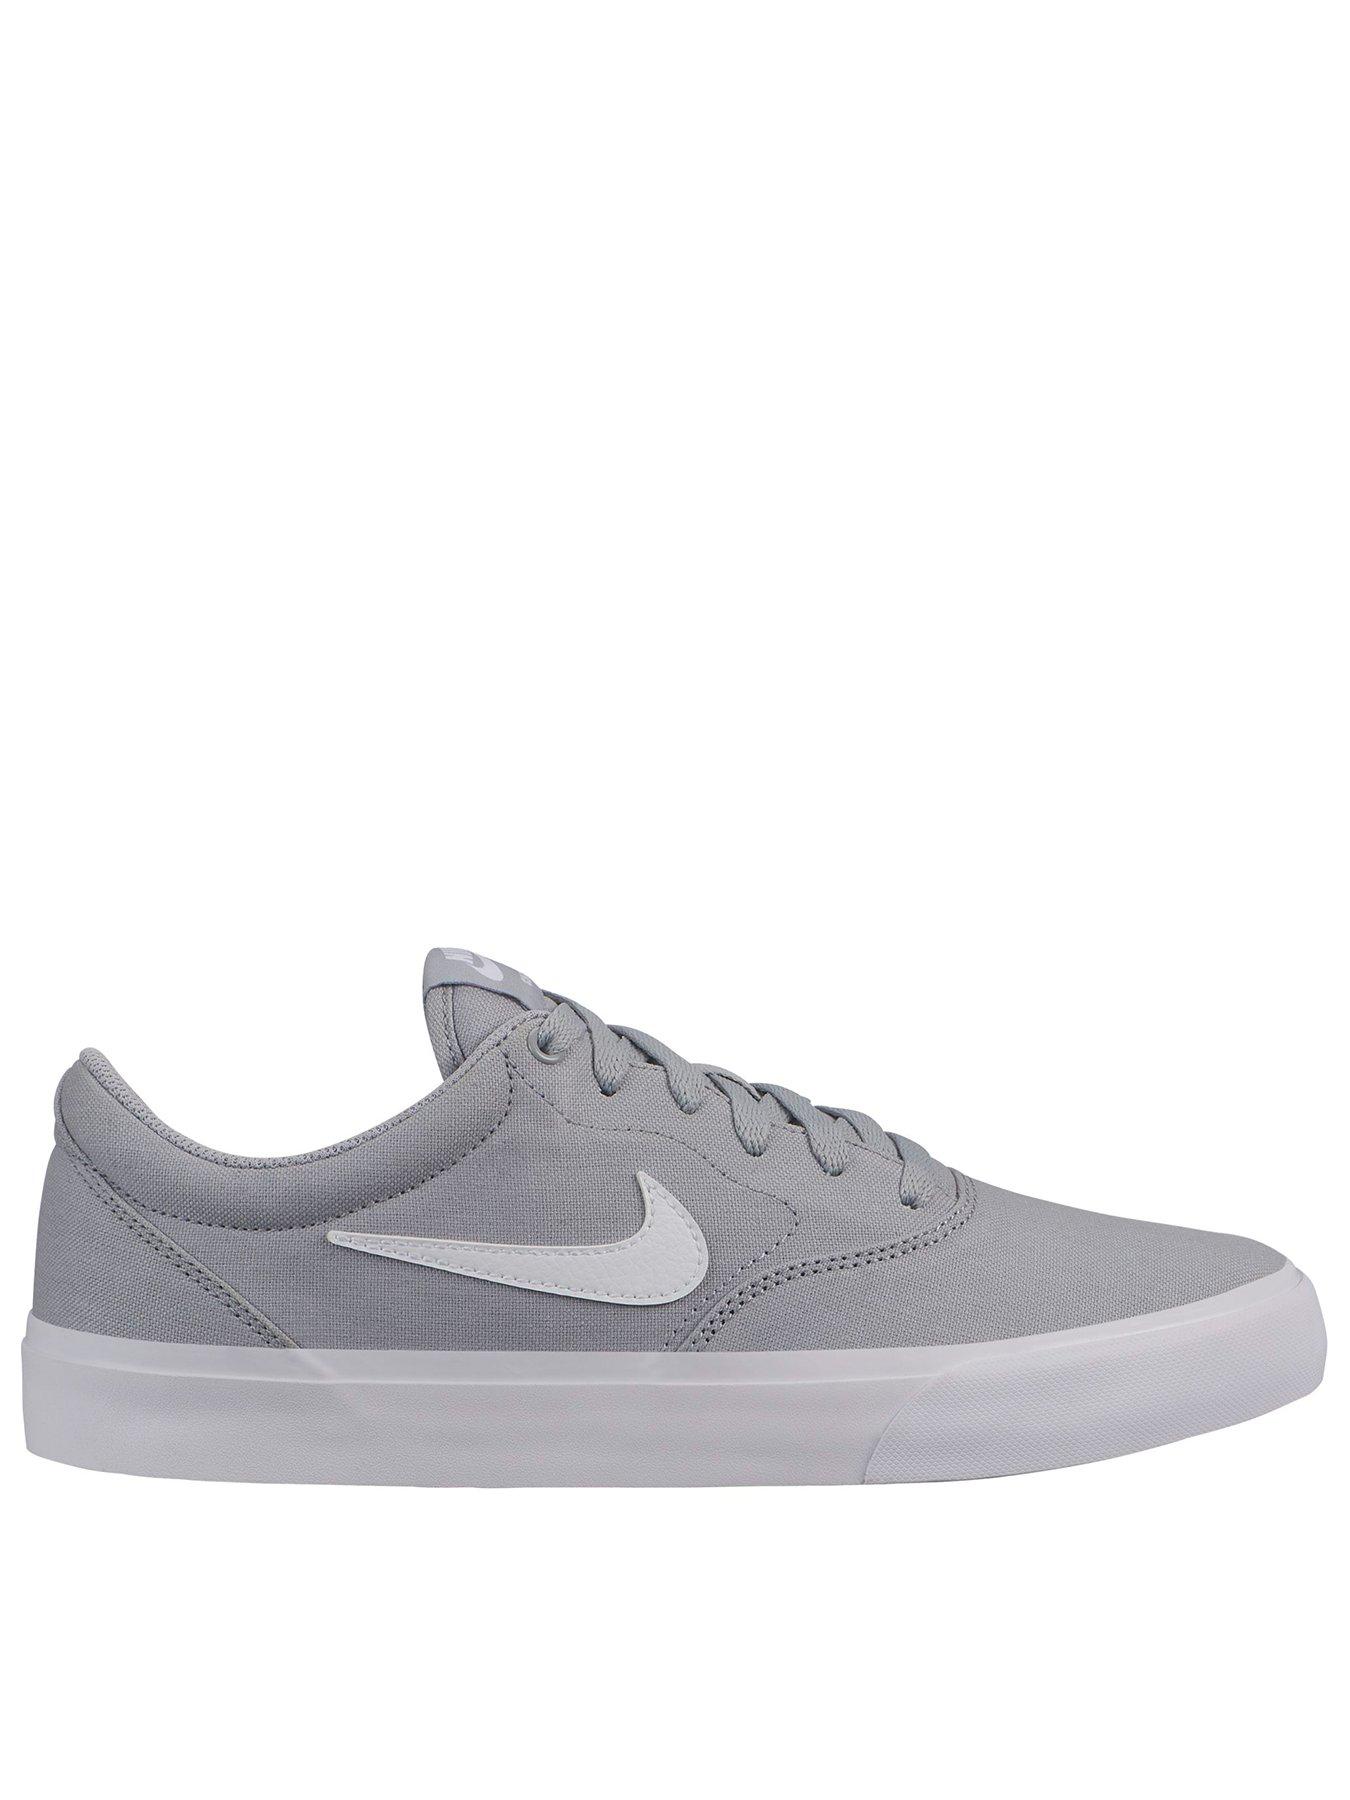 Nike SB Charge Canvas - Grey/White 